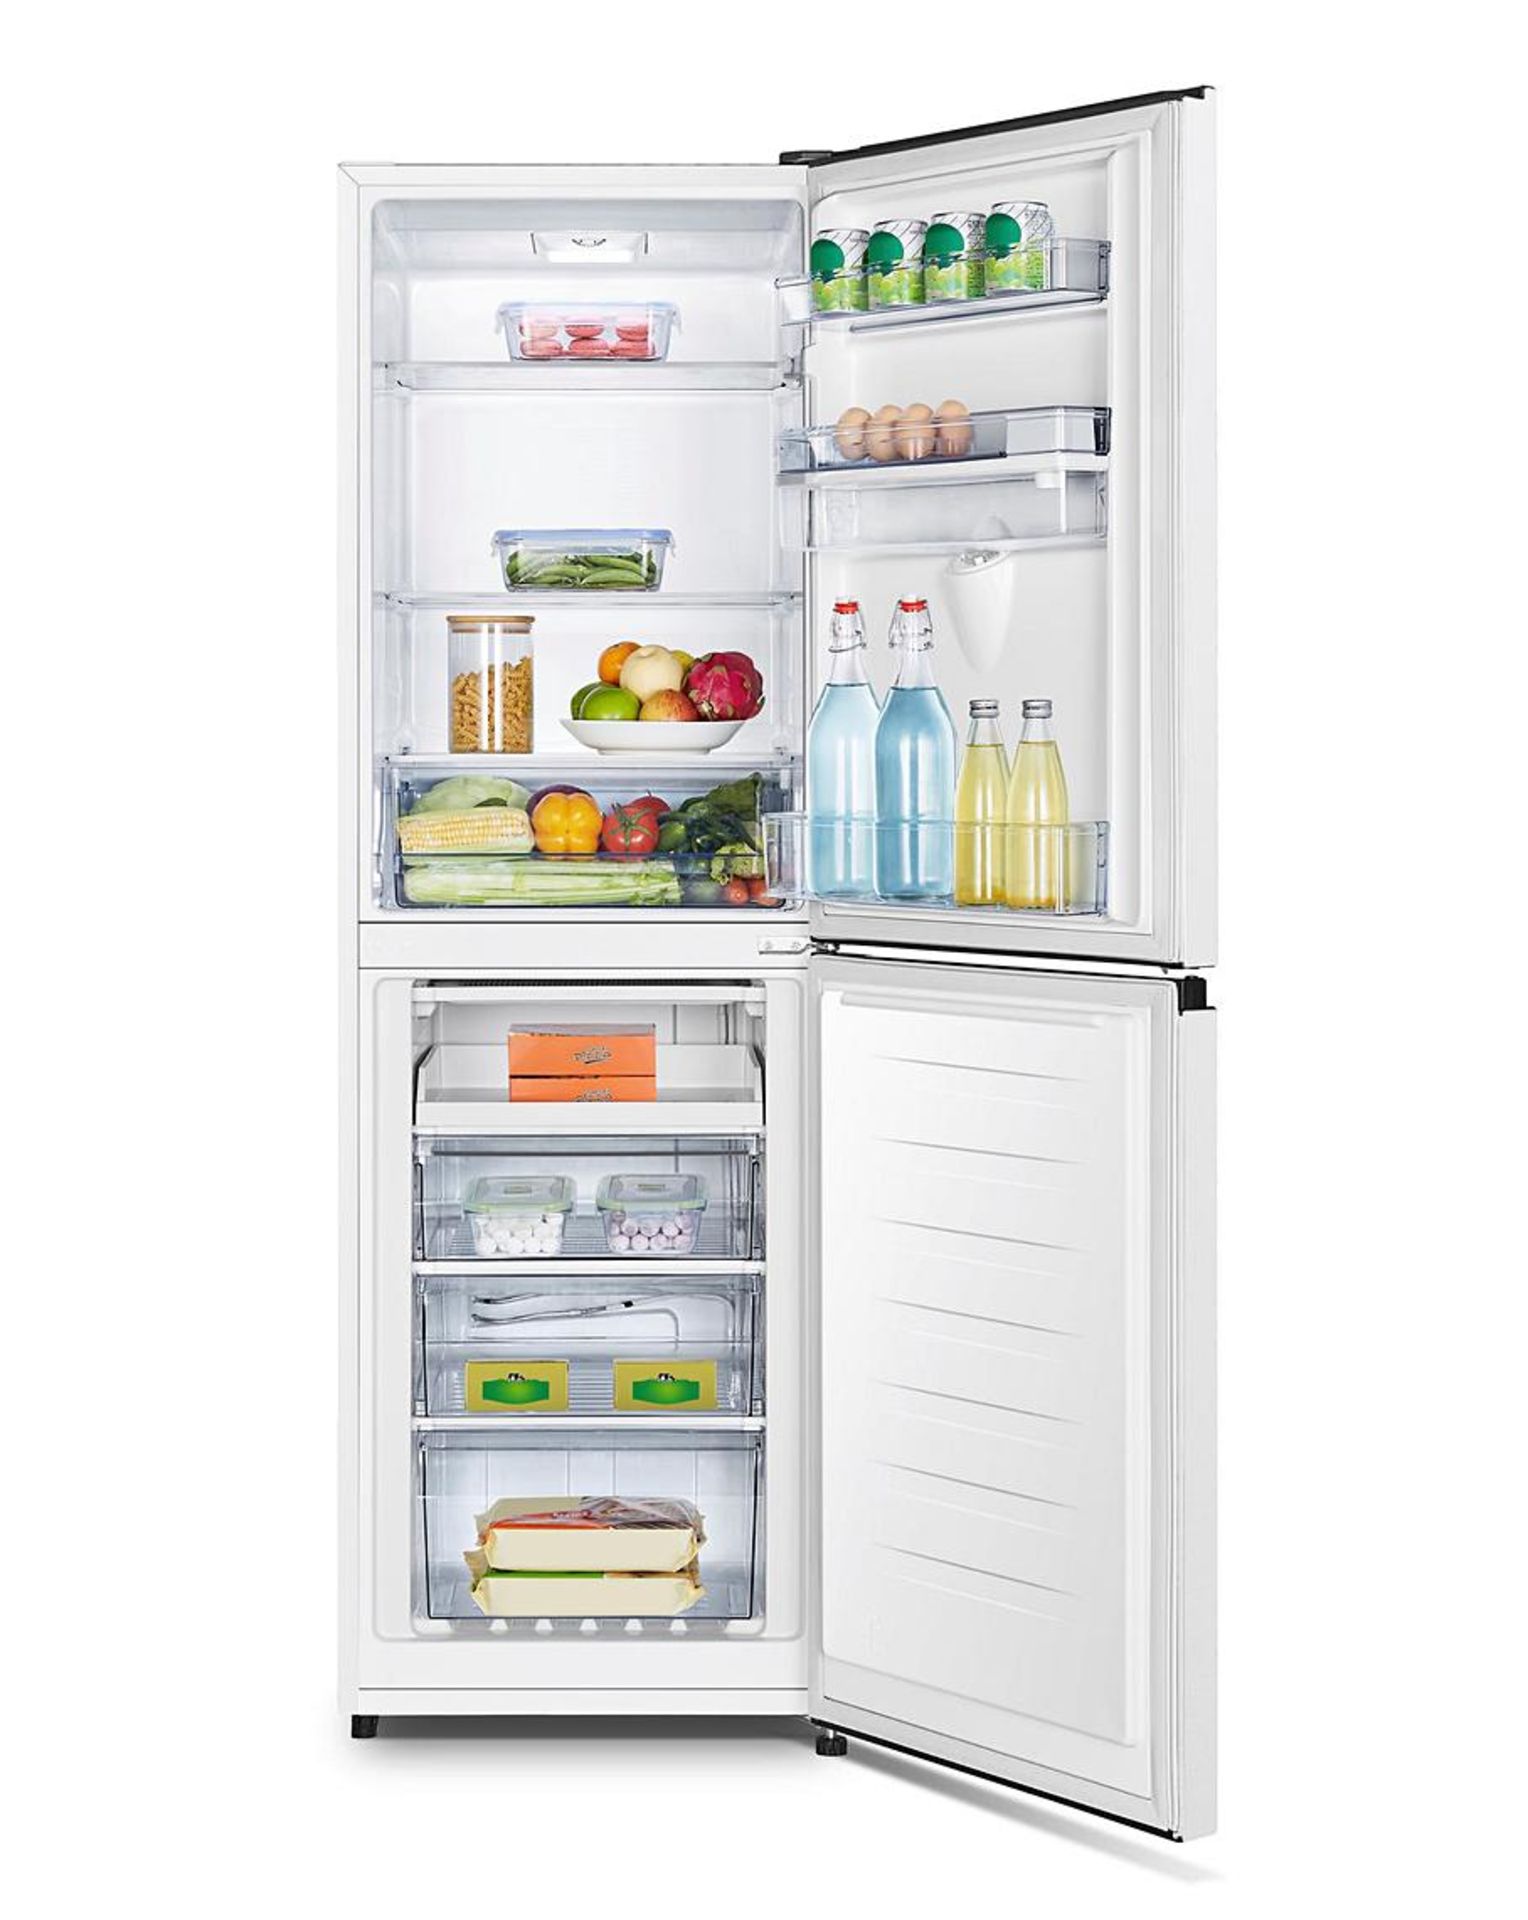 Fridgemaster MC55240MDF Fridge Freezer with Water Dispenser - White. - SR3. With a 240 litre - Image 2 of 2